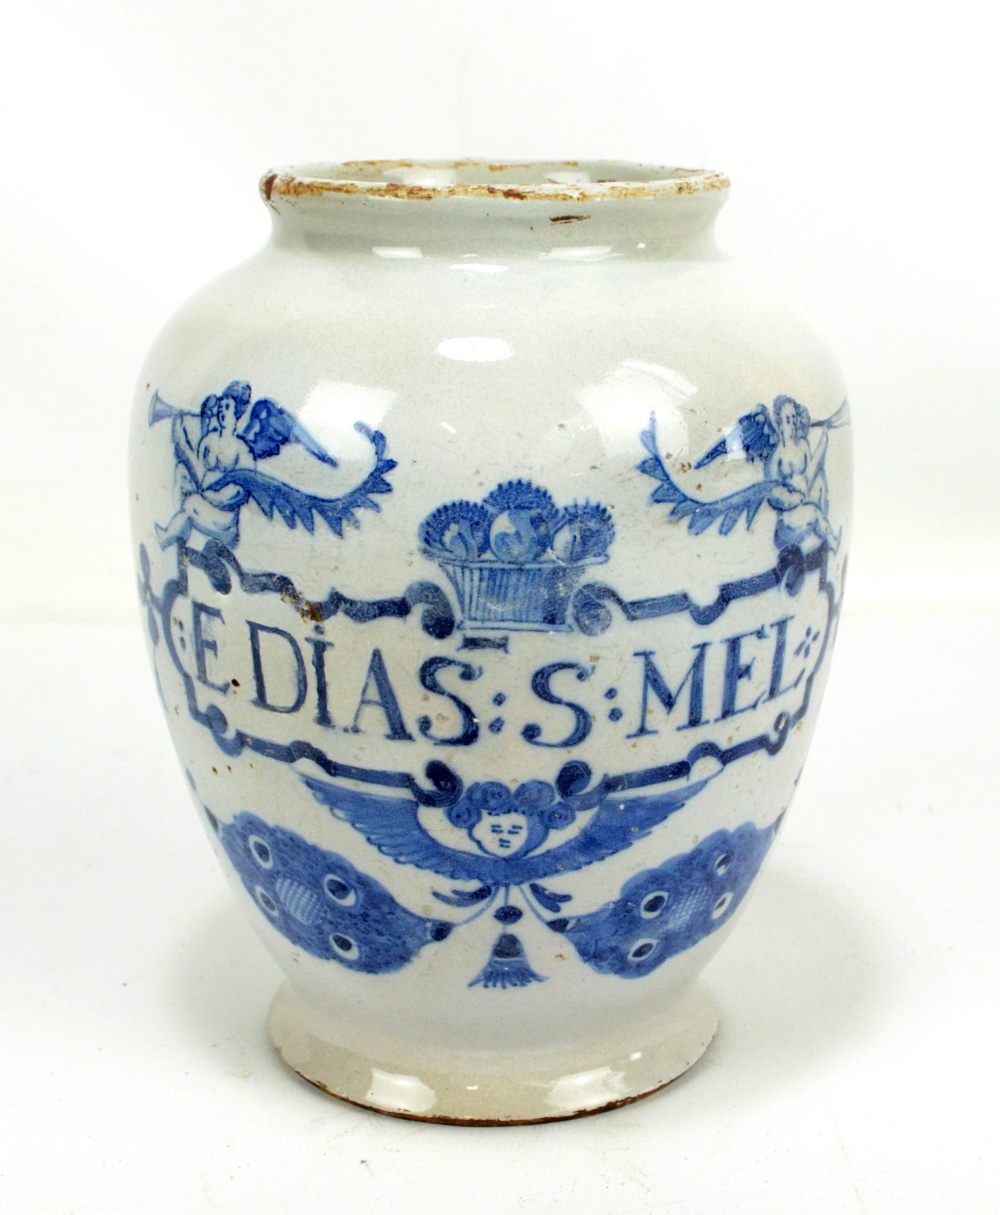 Lot 788A 18th century English dry drug jar